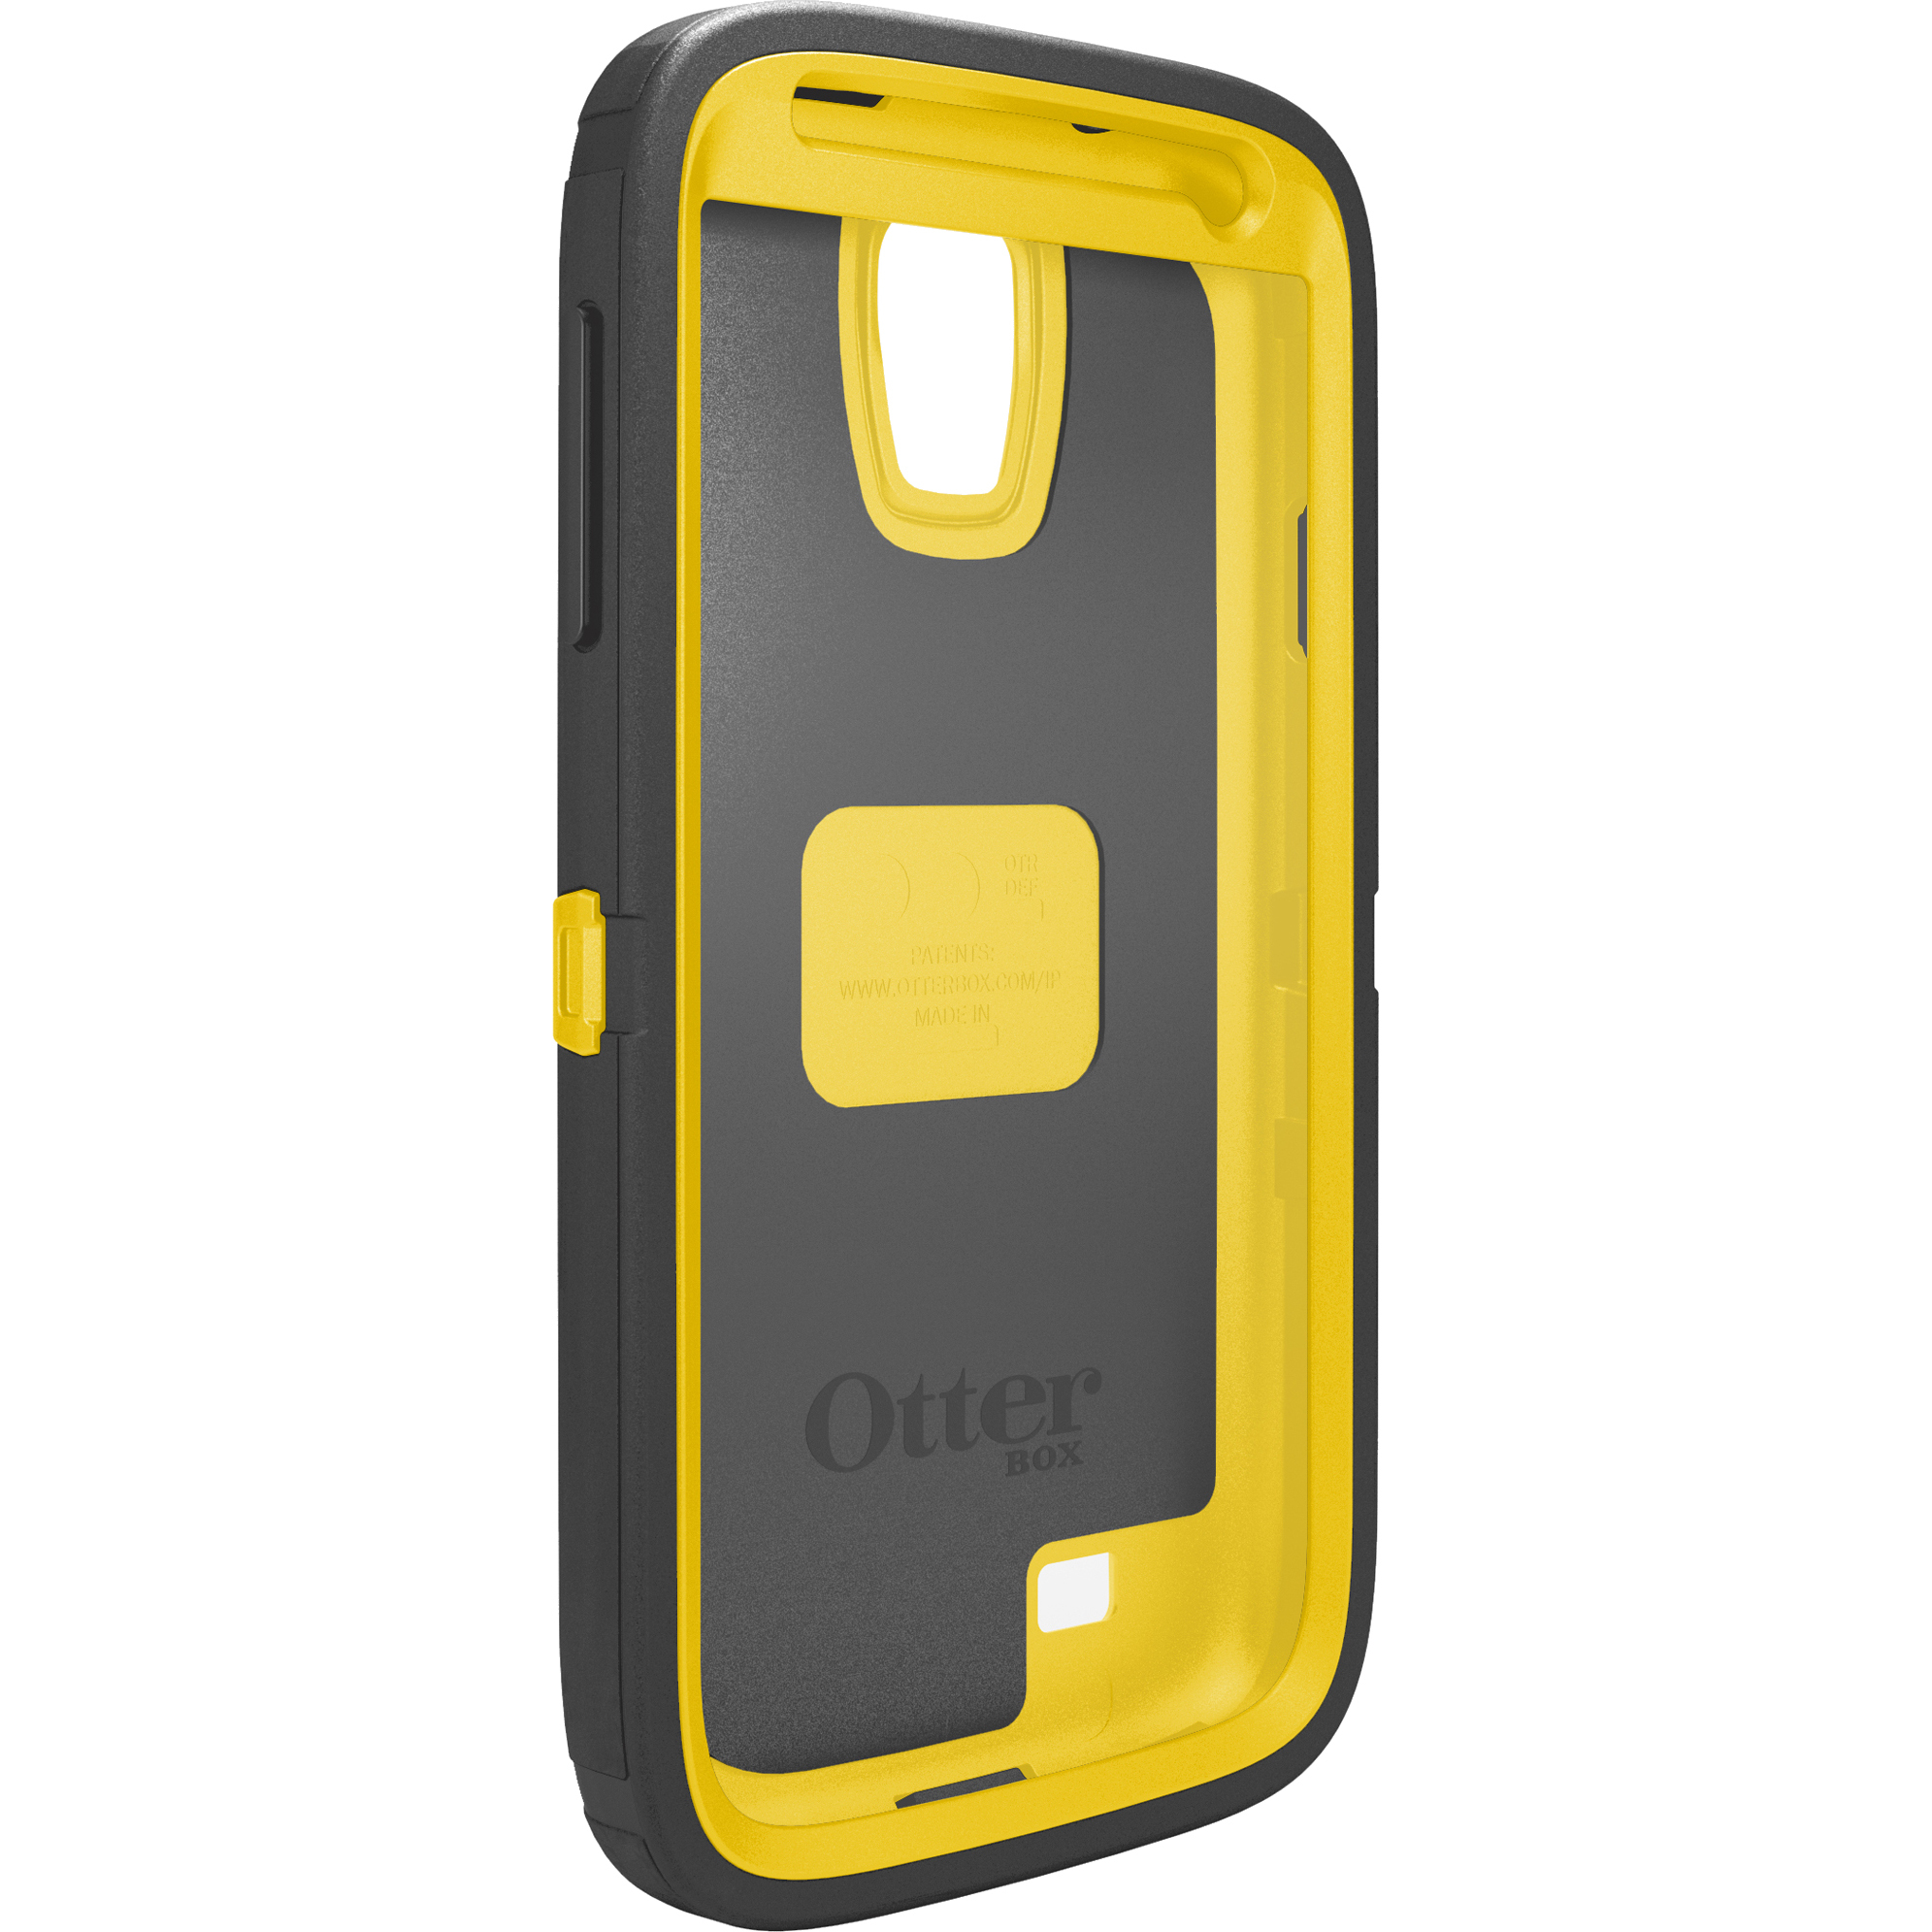 Galaxy S4 Defender Series Case - image 2 of 5